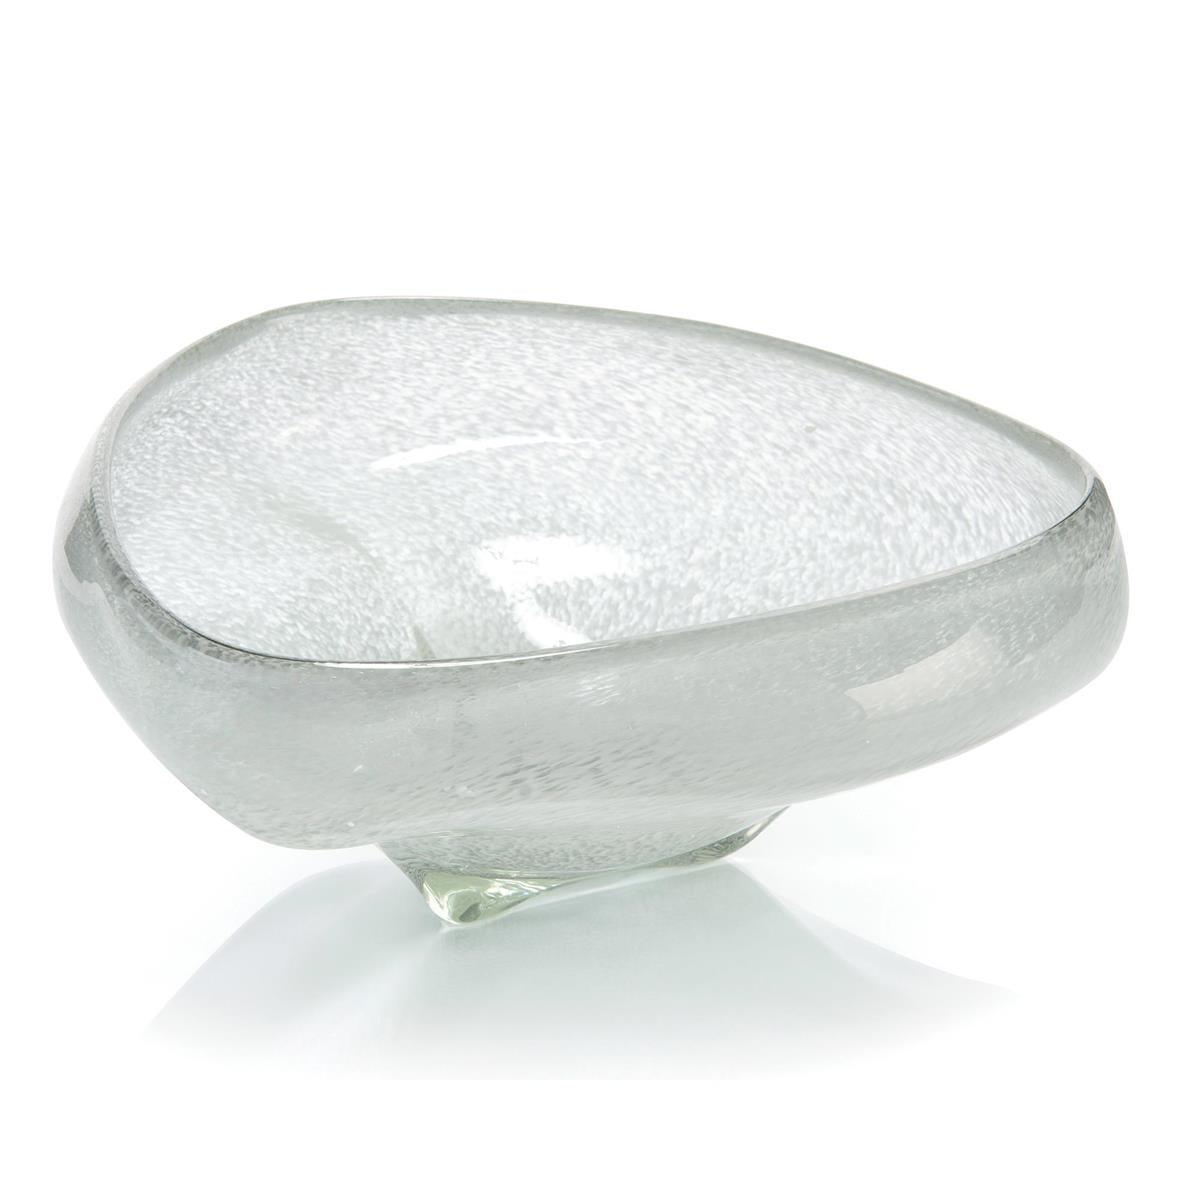 Sea-Foam Glass Bowl-John Richard-Bowls-Artistic Elements